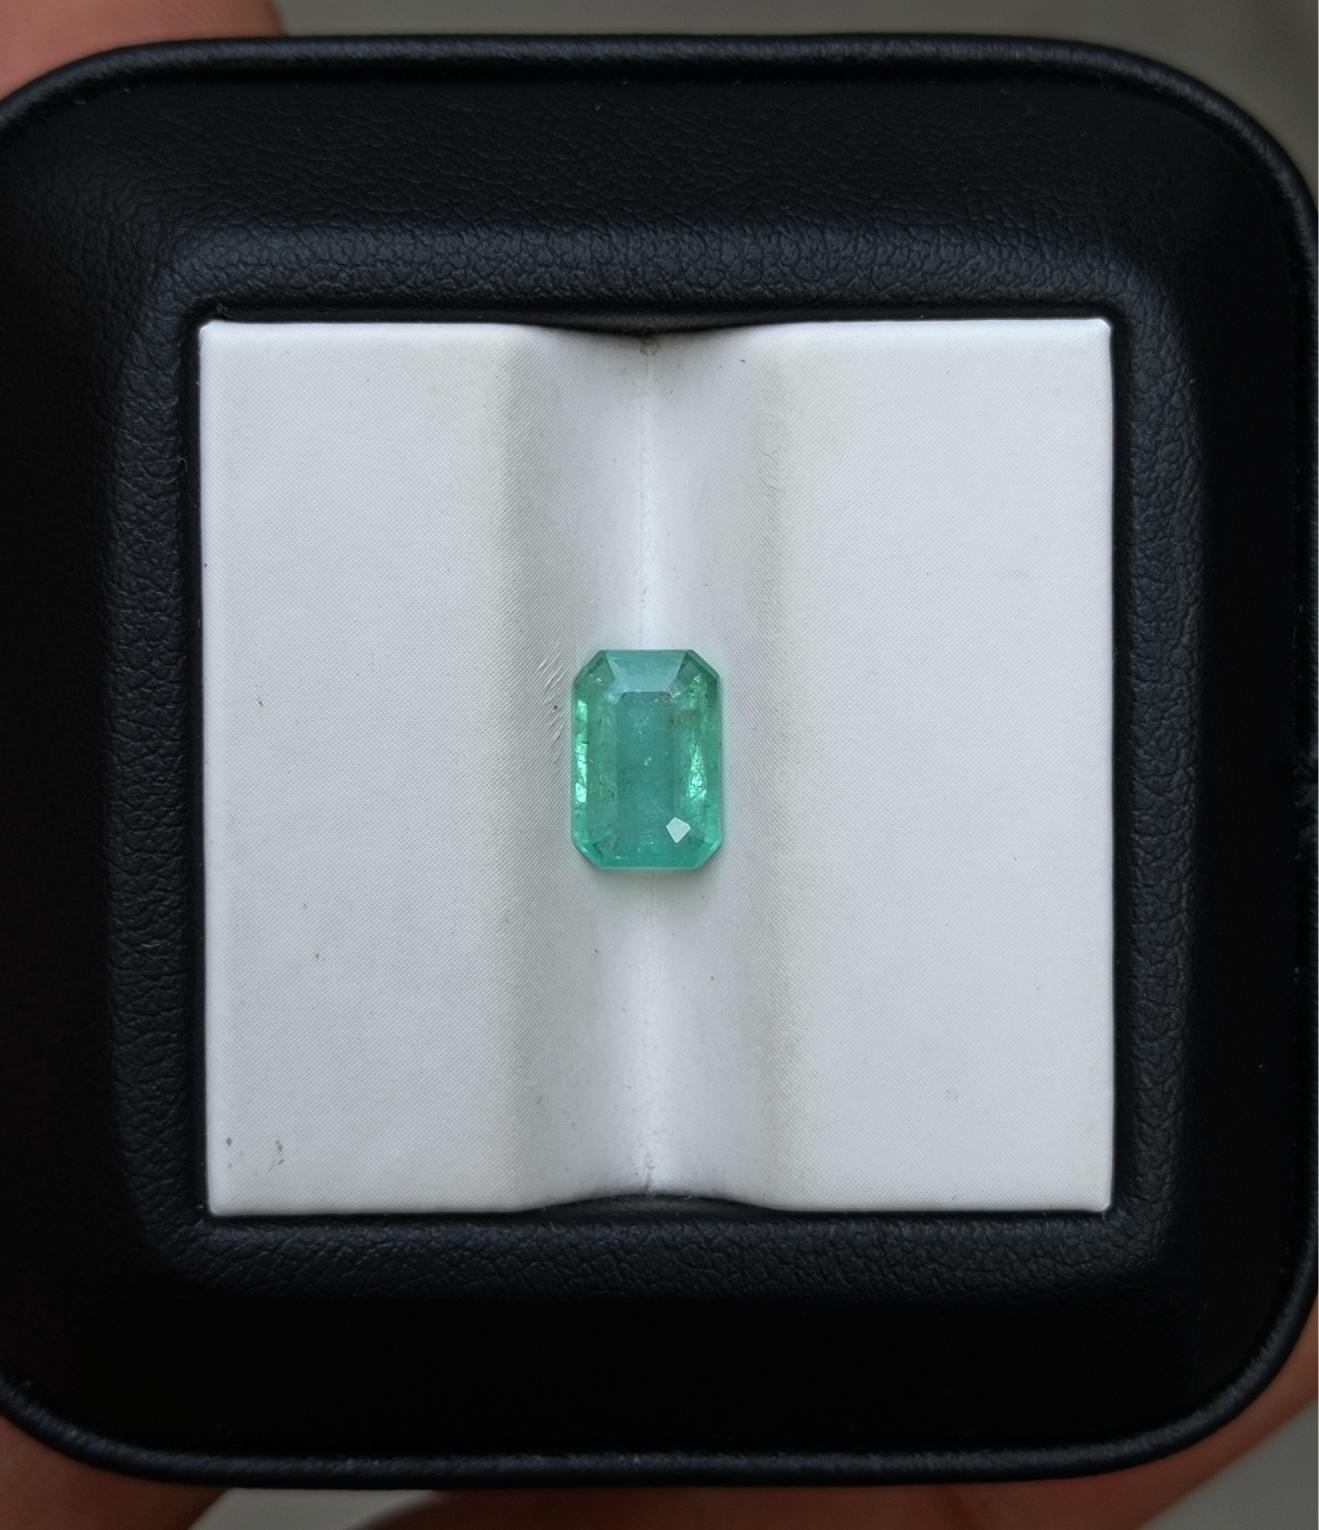 1.25ct Emerald for sale - Budh Ratna - Zamurd - Pachu Stone, Markat Mani Stone - 8.5x5.8x3mm